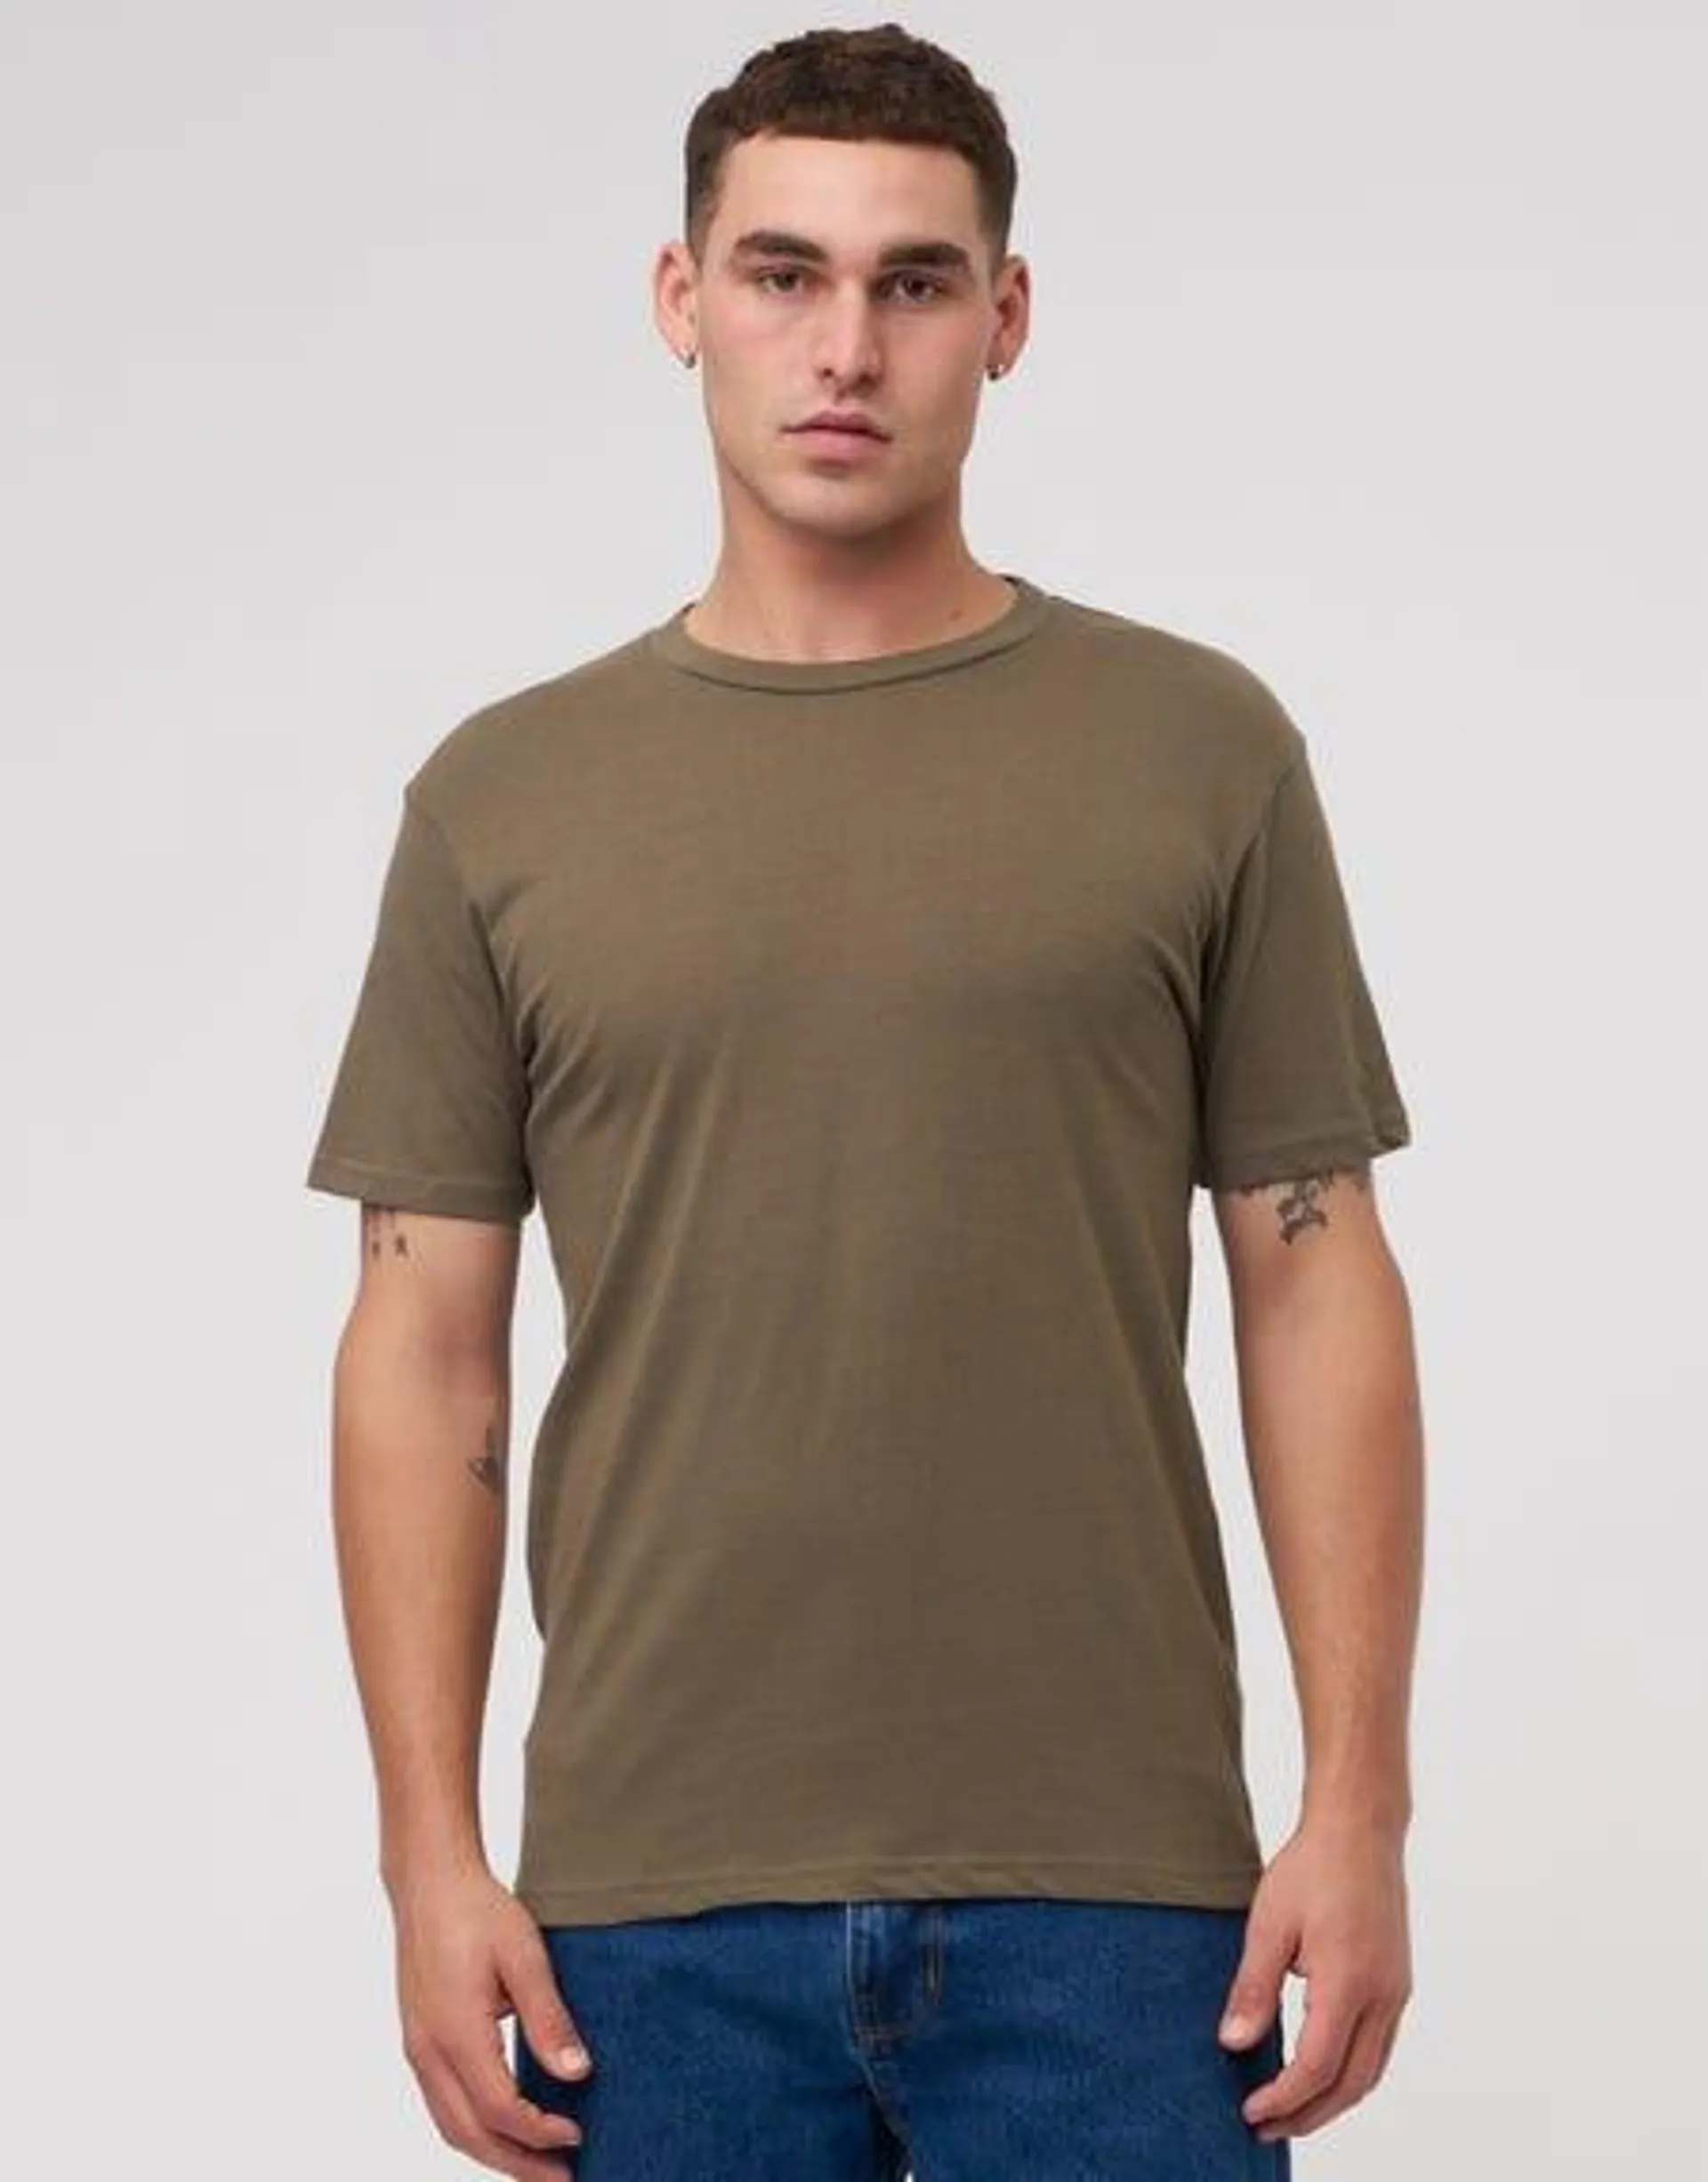 Organic Crew Neck Basic T Shirt in Olive Marl